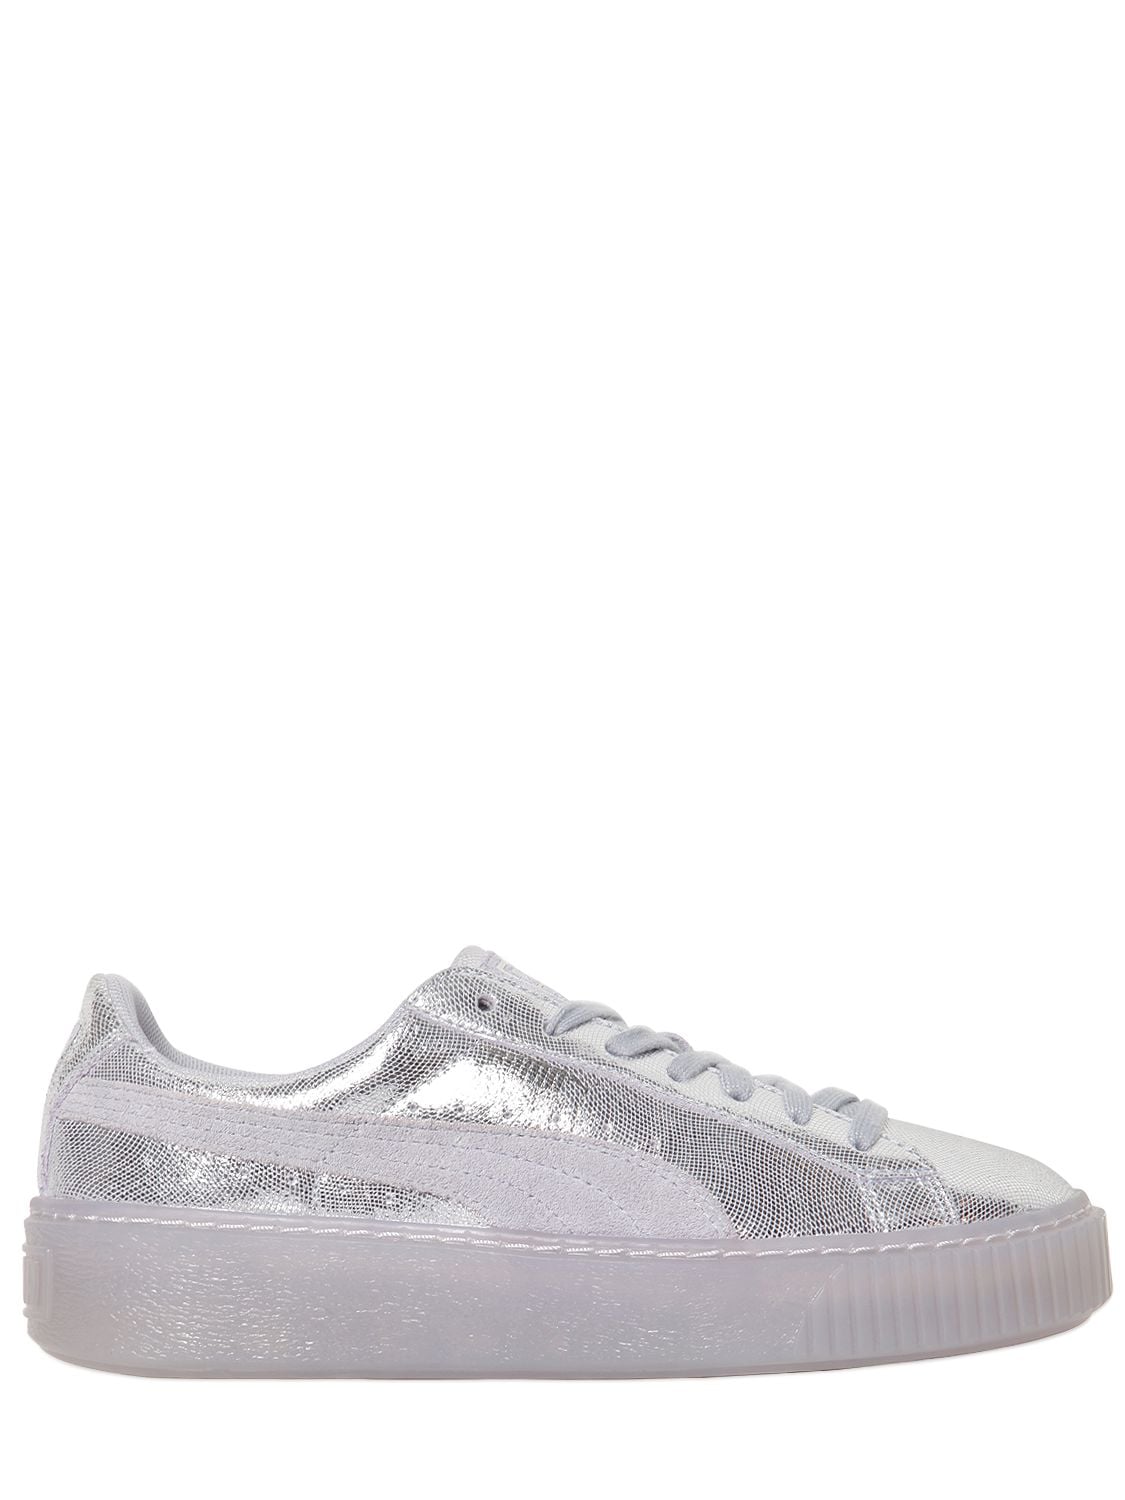 Puma Basket Platform Leather Sneakers In Silver